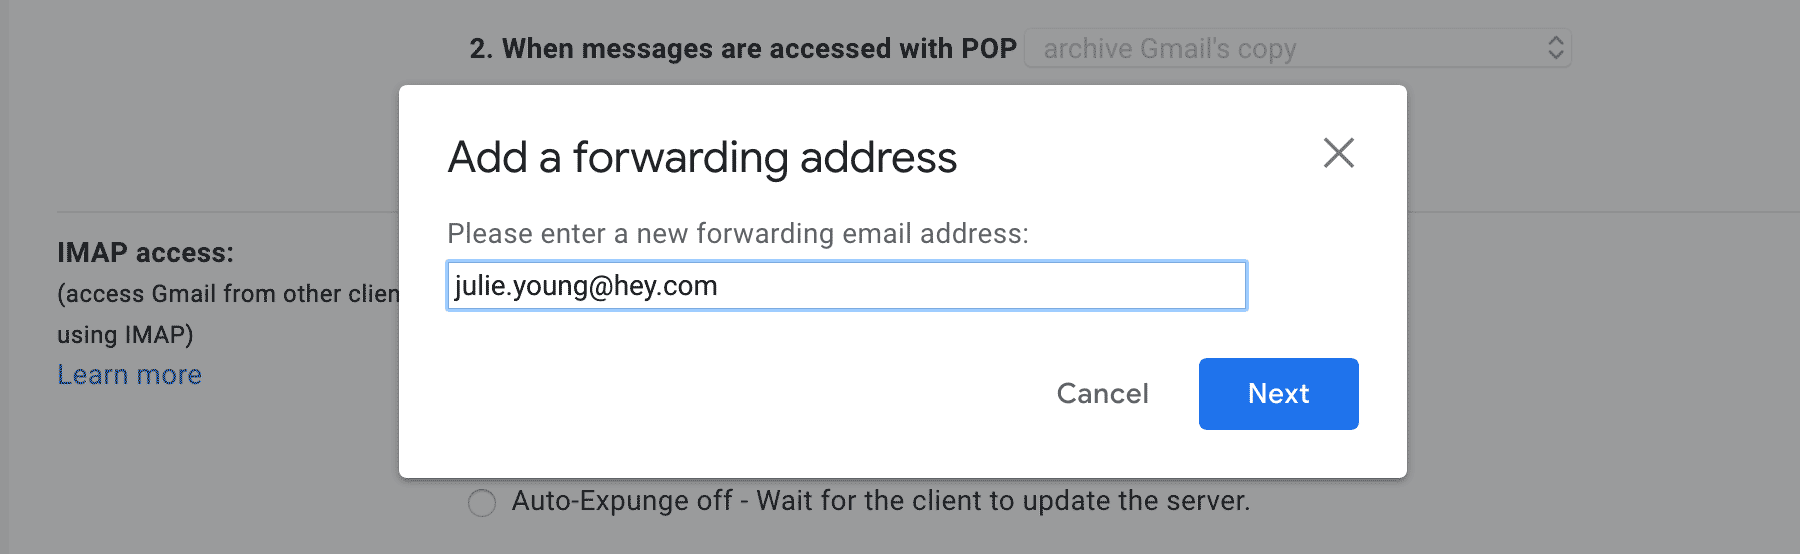 Adding a forward address in Gmail